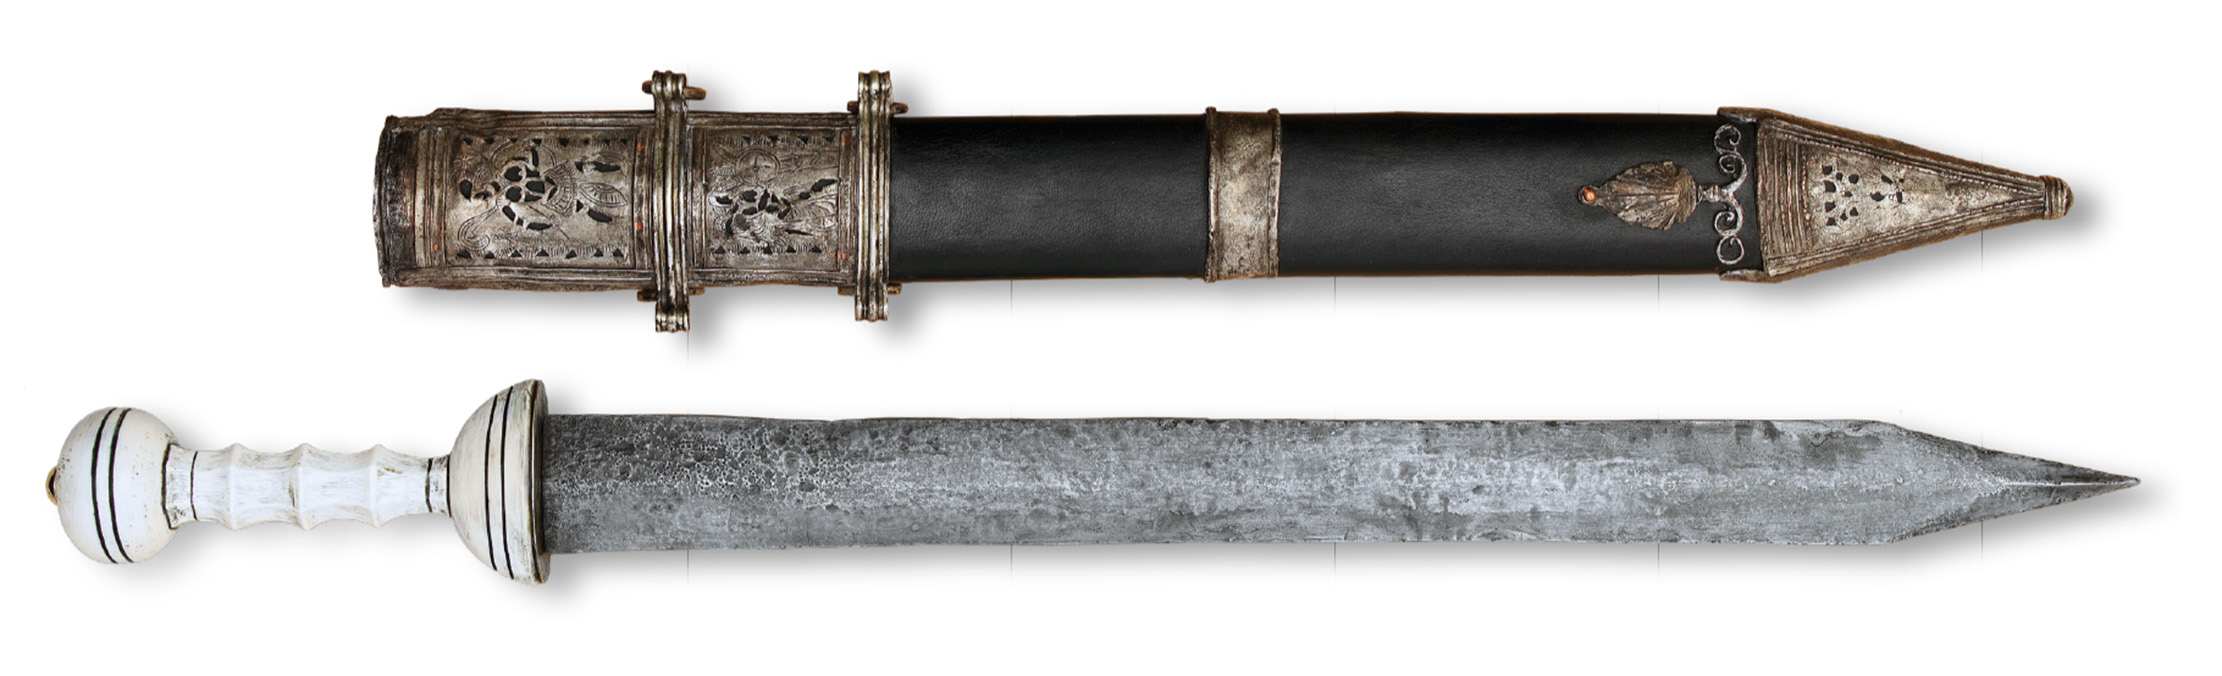 Ancient Roman Gladiators Weapons